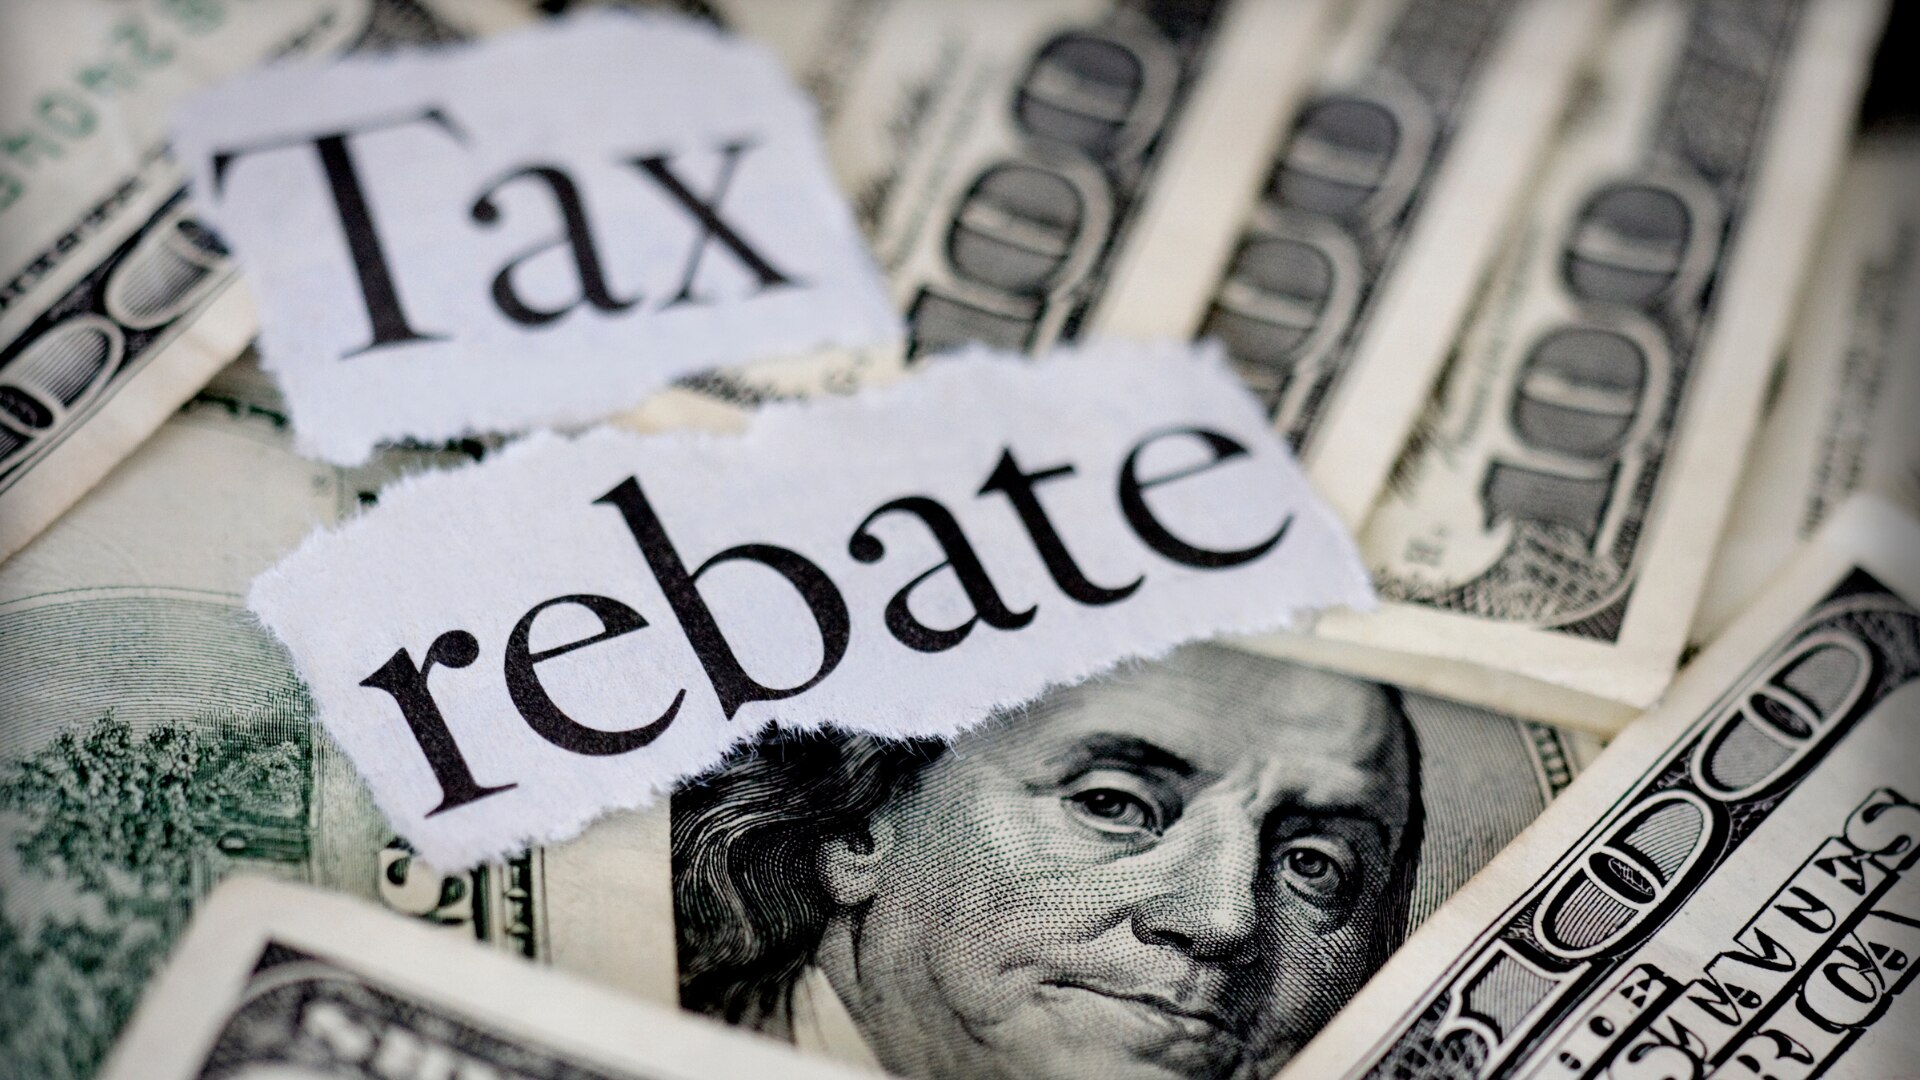 Alabama Tax Rebate Check